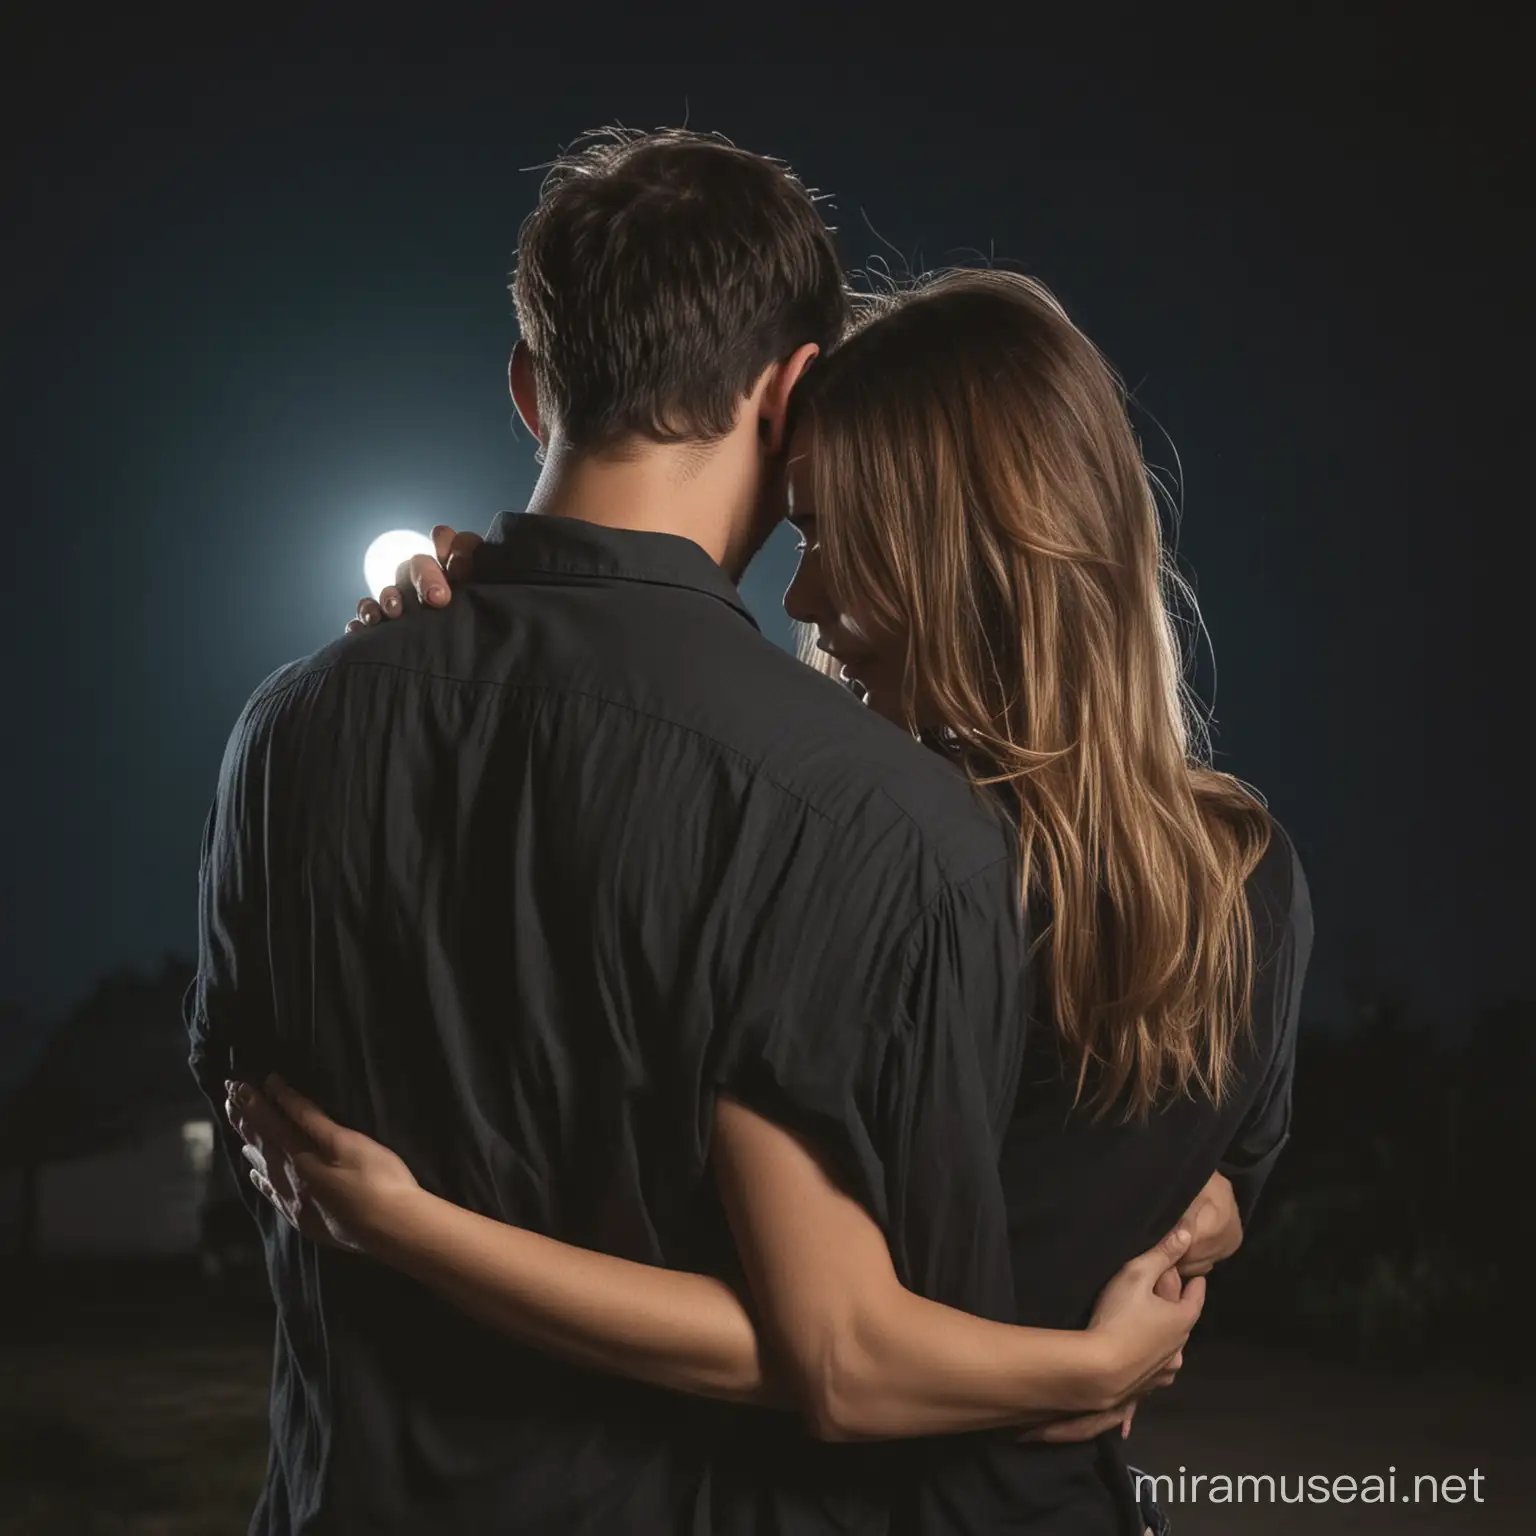 Romantic 35YearOld Couple Embracing at Night